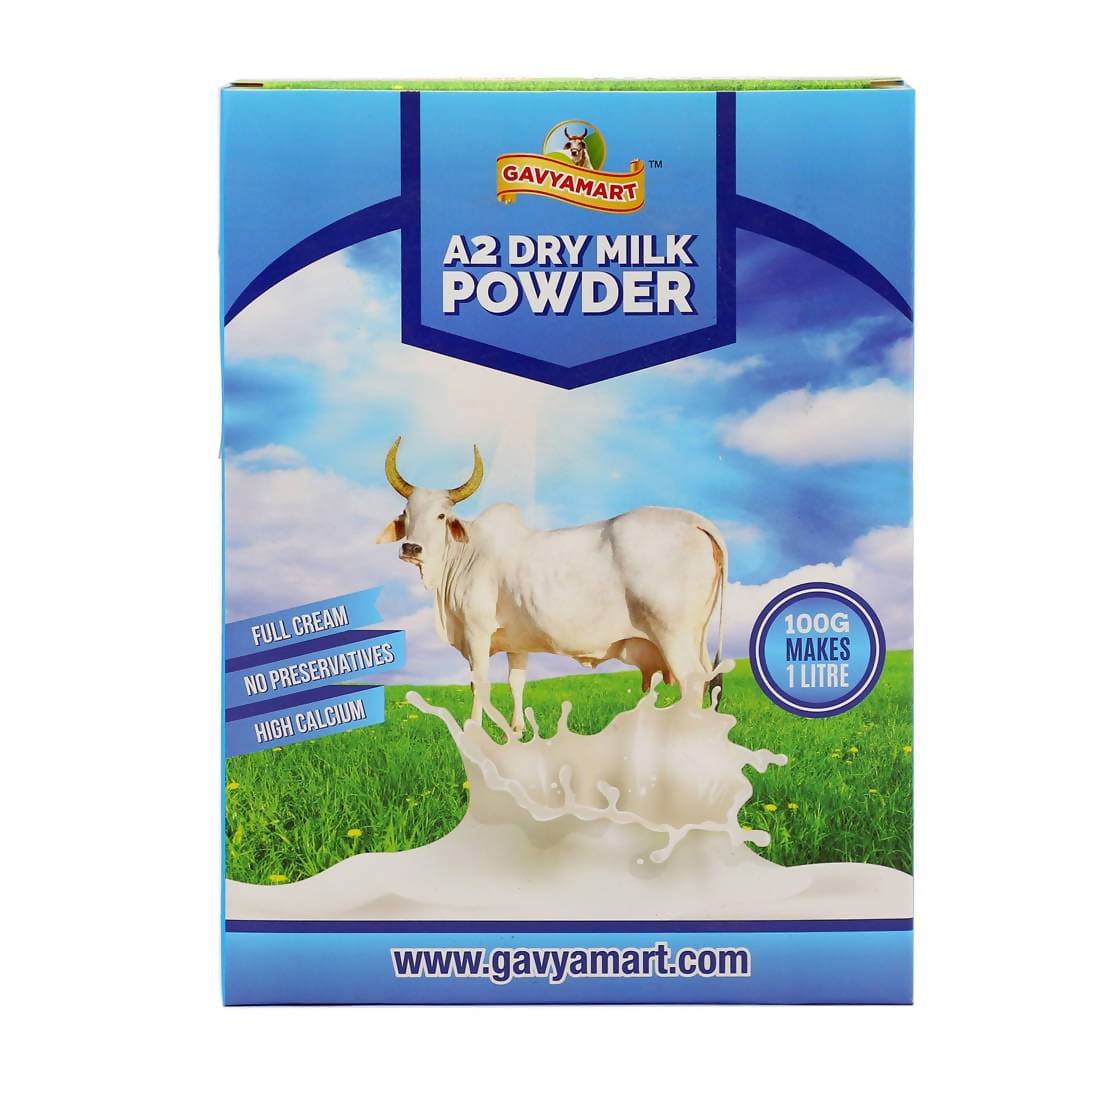 Gavyamart A2 Dry Milk Powder